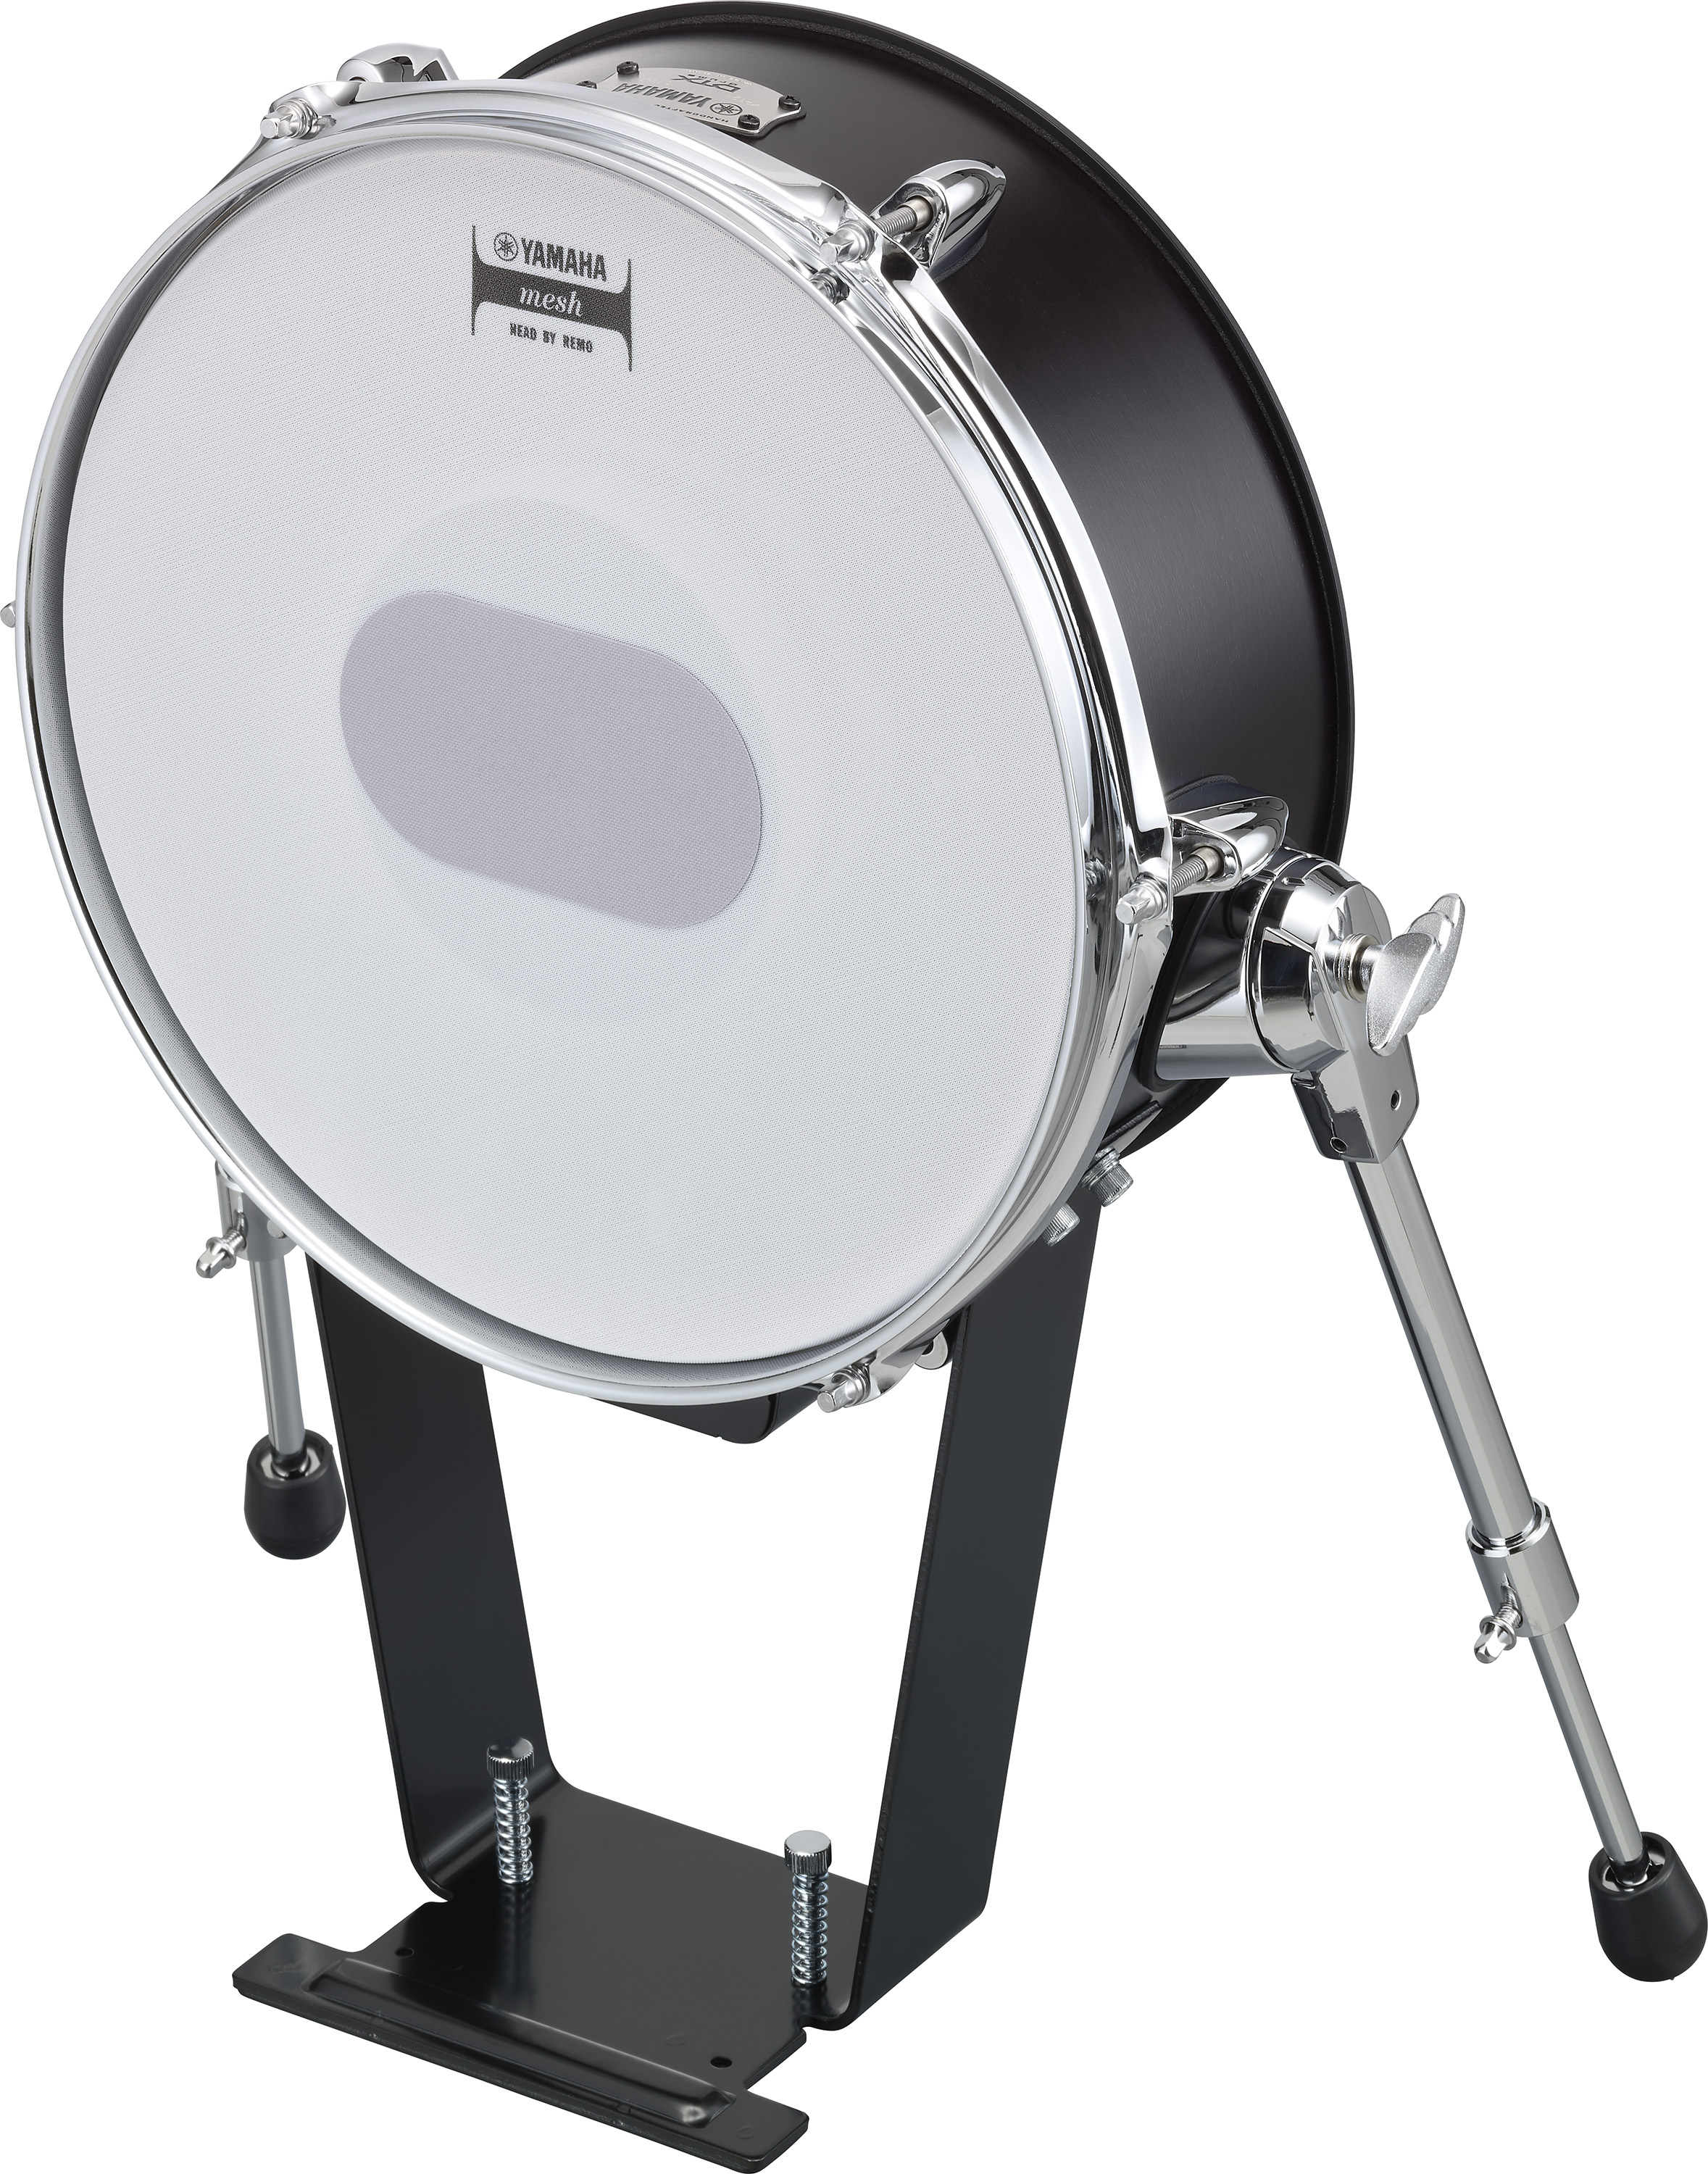 Yamaha Dtx10-kx Electronic Drum Kit Black Forrest - Elektronisch drumstel - Variation 3